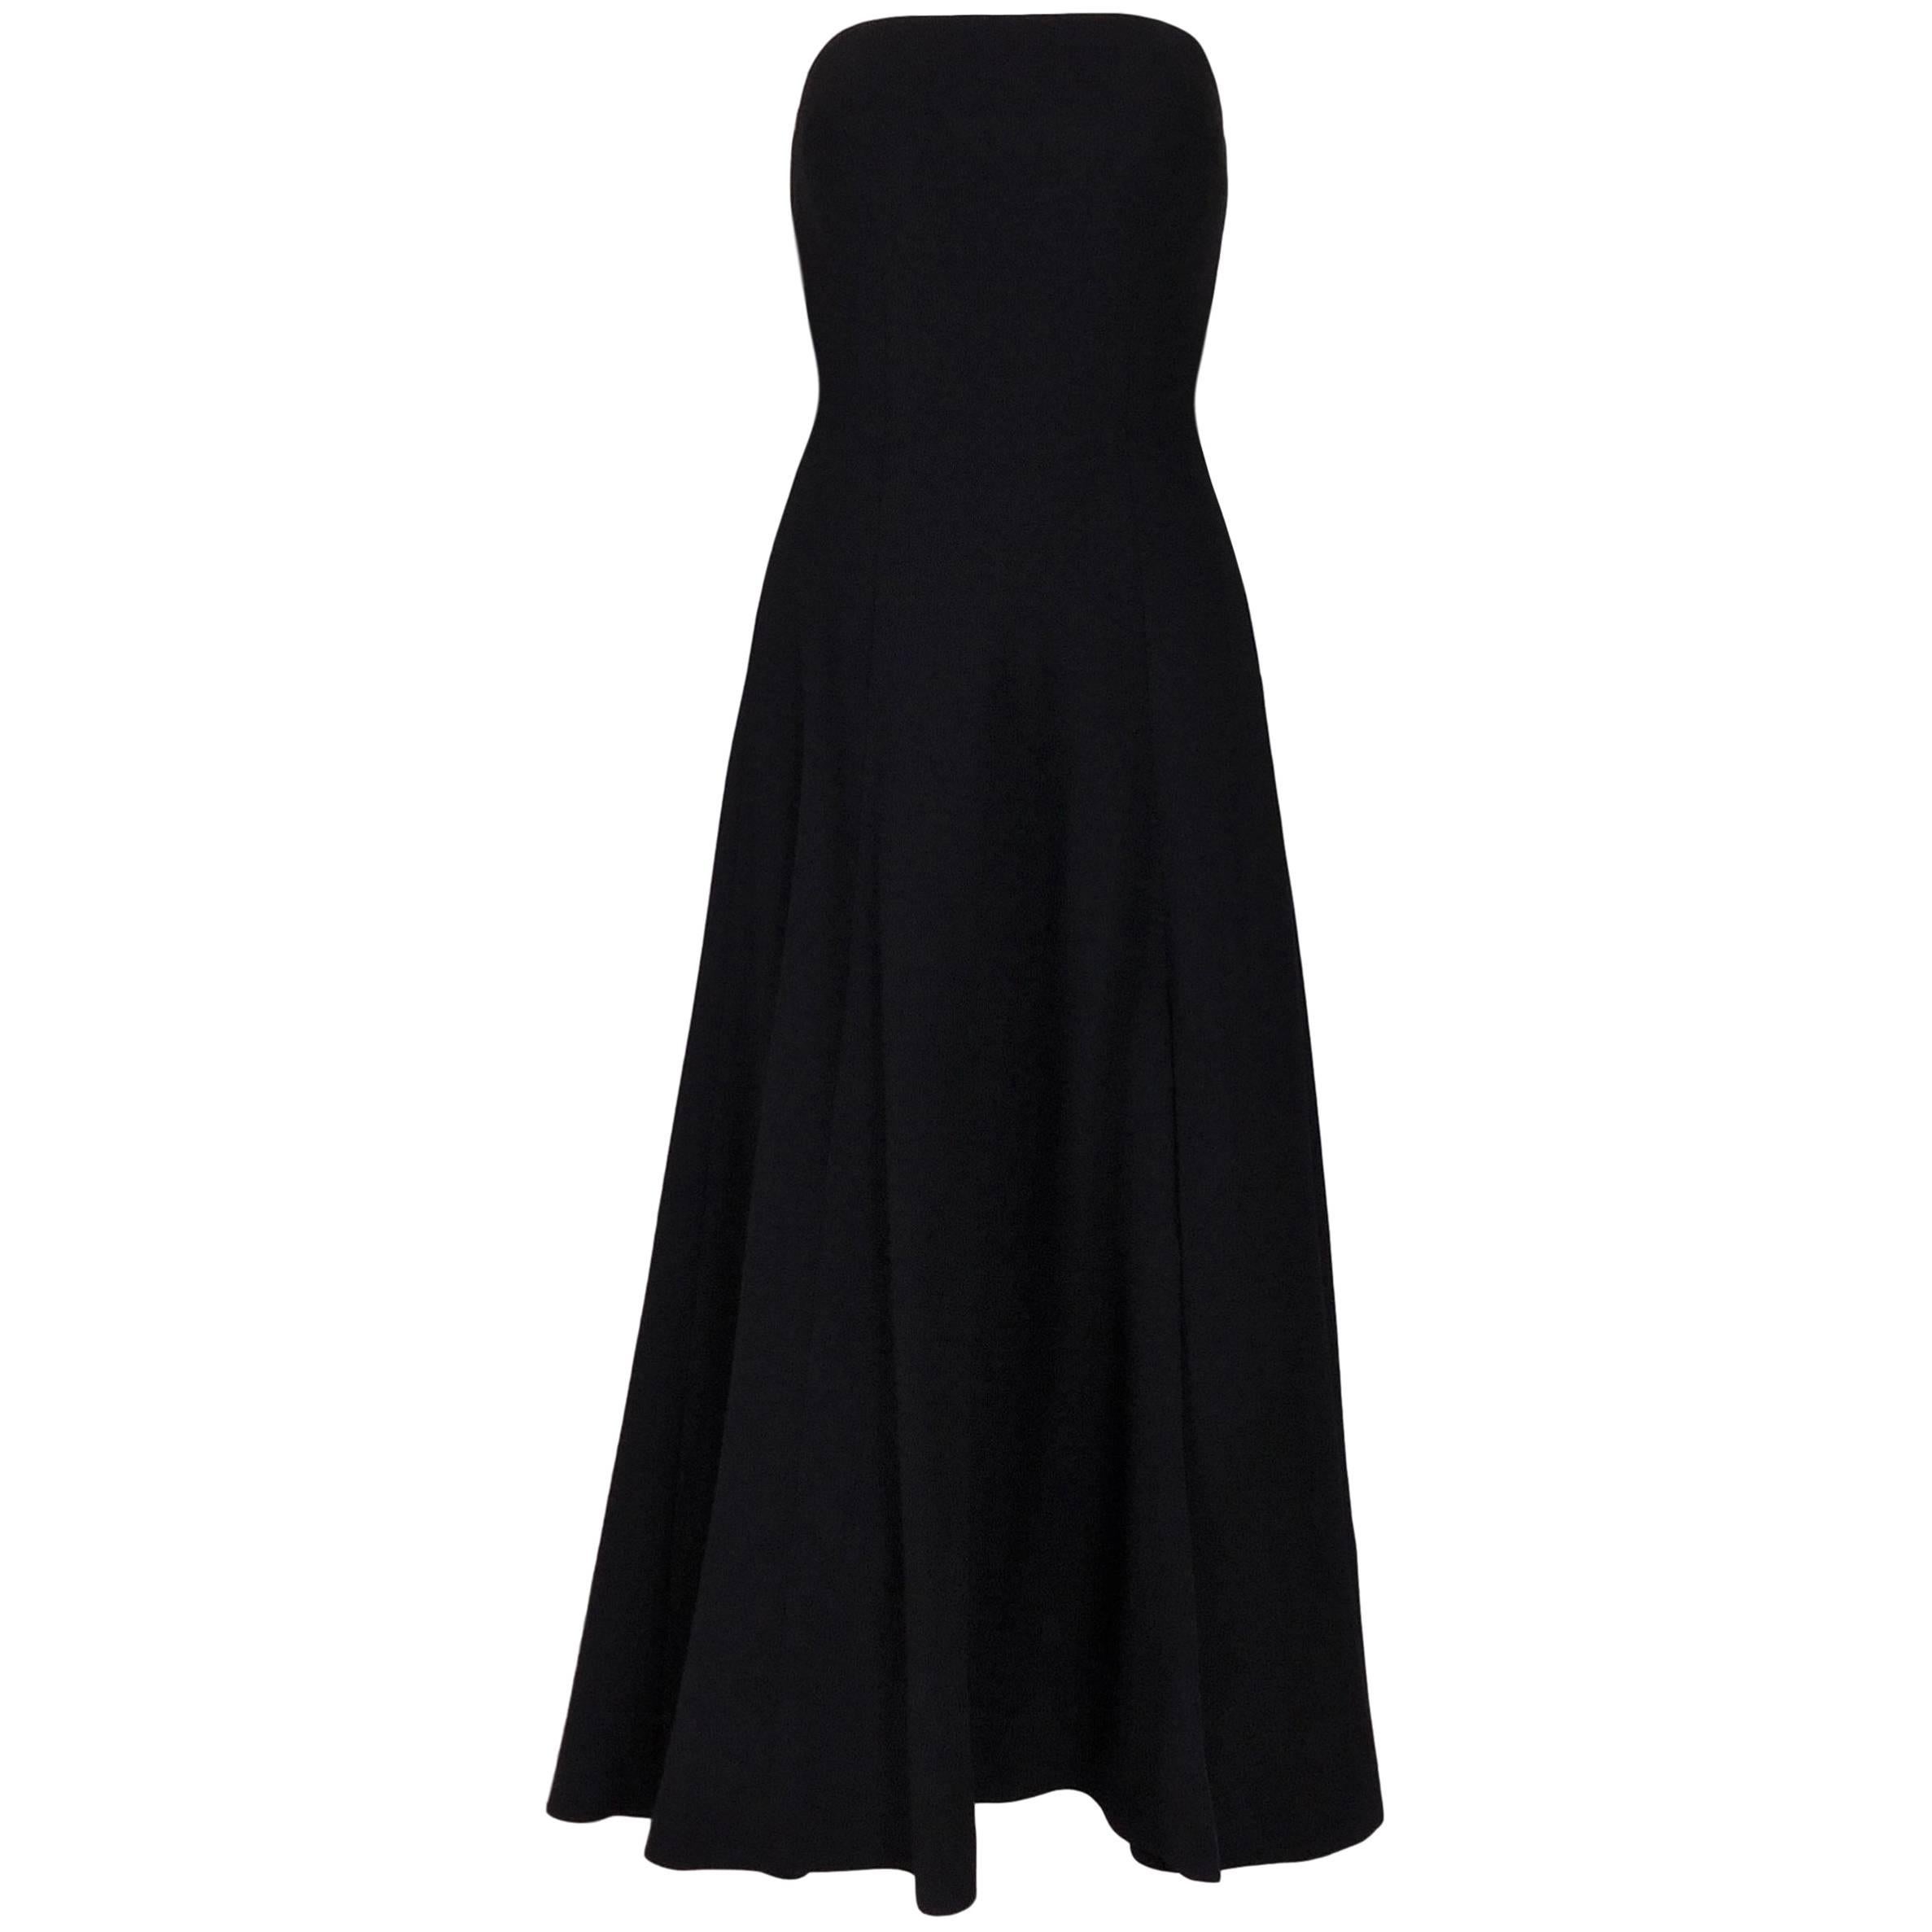 Atelier Versace Black Minimalist 1950s Style A-line Strapless Dress, Circa 1999